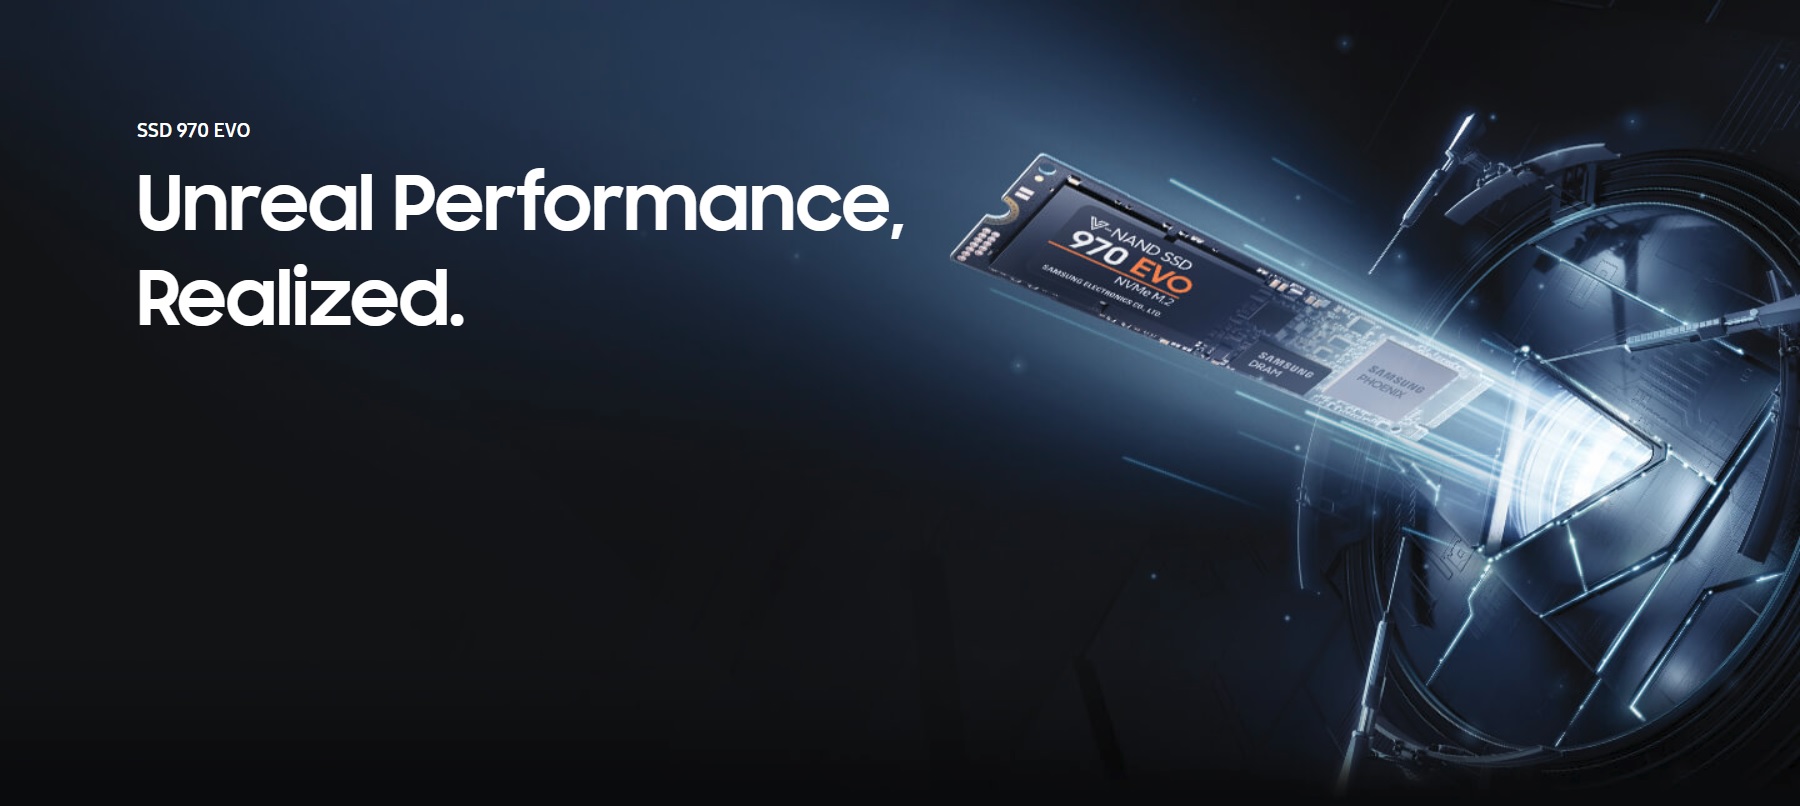 Review Ổ cứng SSD 250g Samsung 970 EVO Plus M 2 NVMe PCIe 2280 MZ-V7E250BW